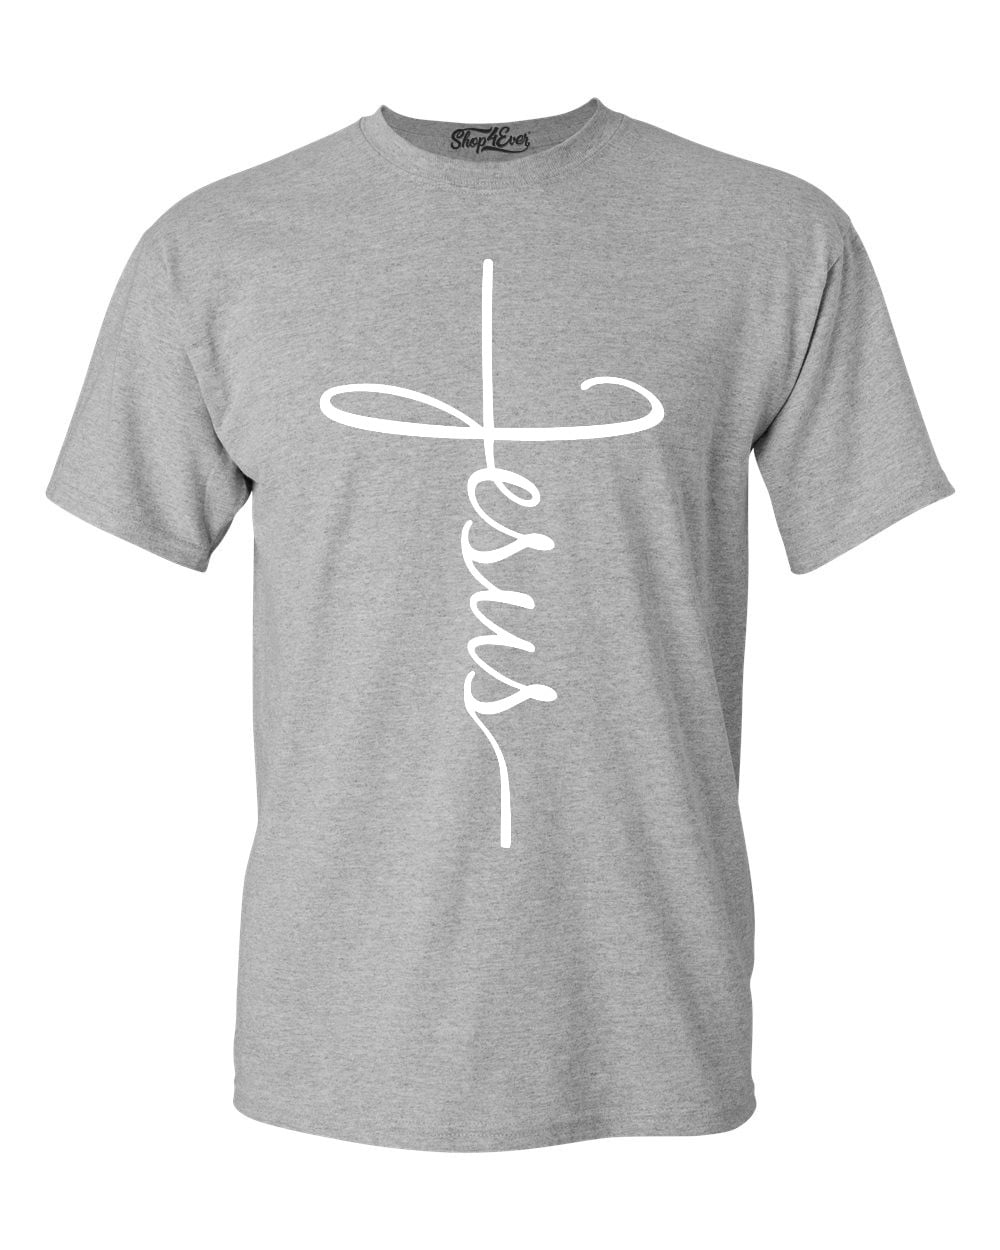 Shop4Ever - Shop4Ever Men's Jesus Cross Religious Graphic T-shirt ...